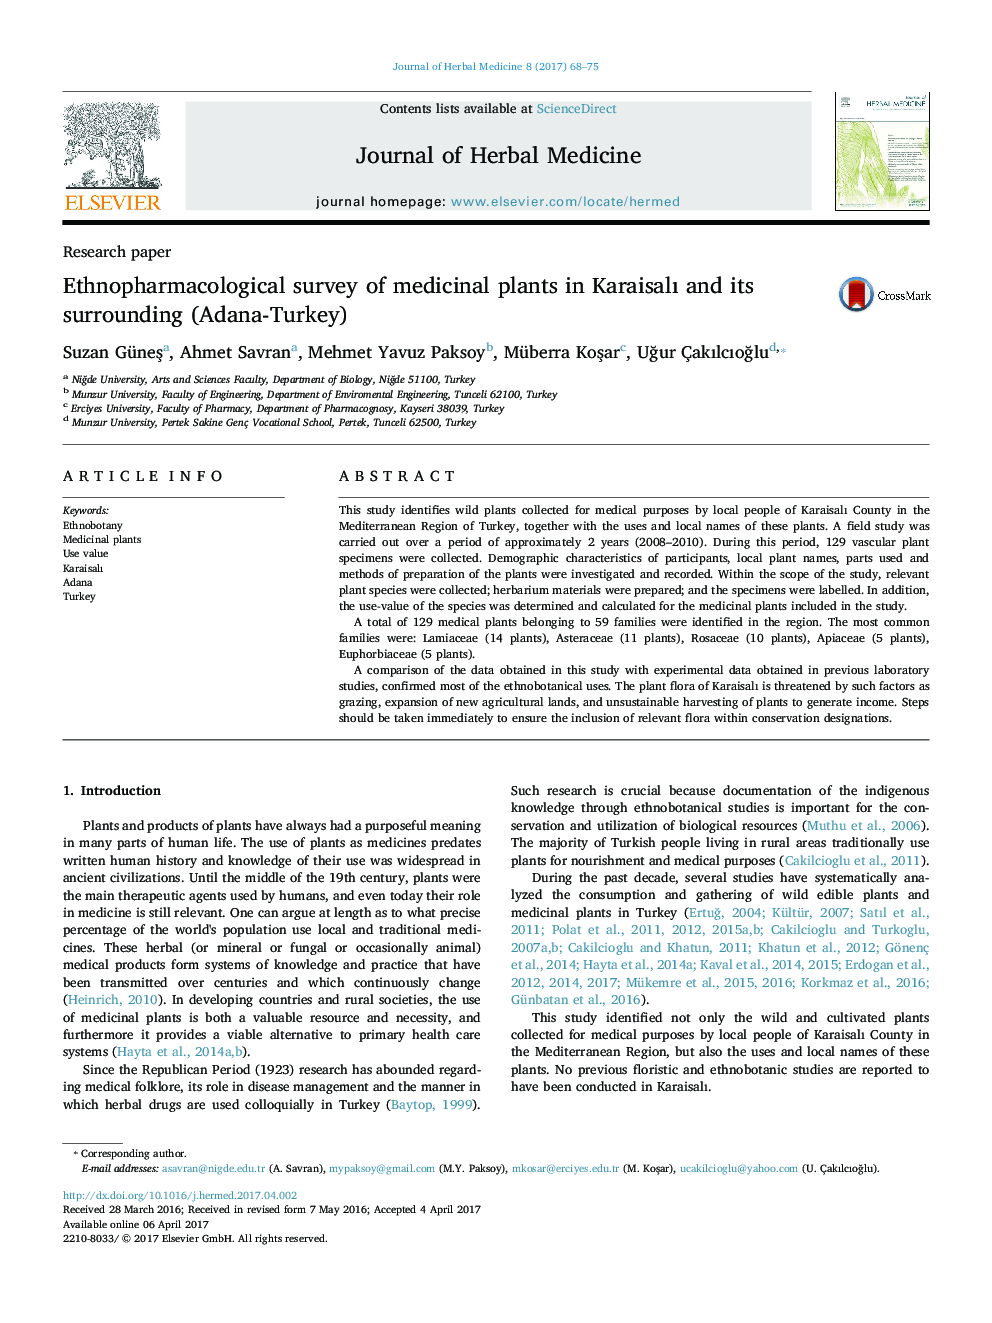 Ethnopharmacological survey of medicinal plants in KaraisalÄ± and its surrounding (Adana-Turkey)